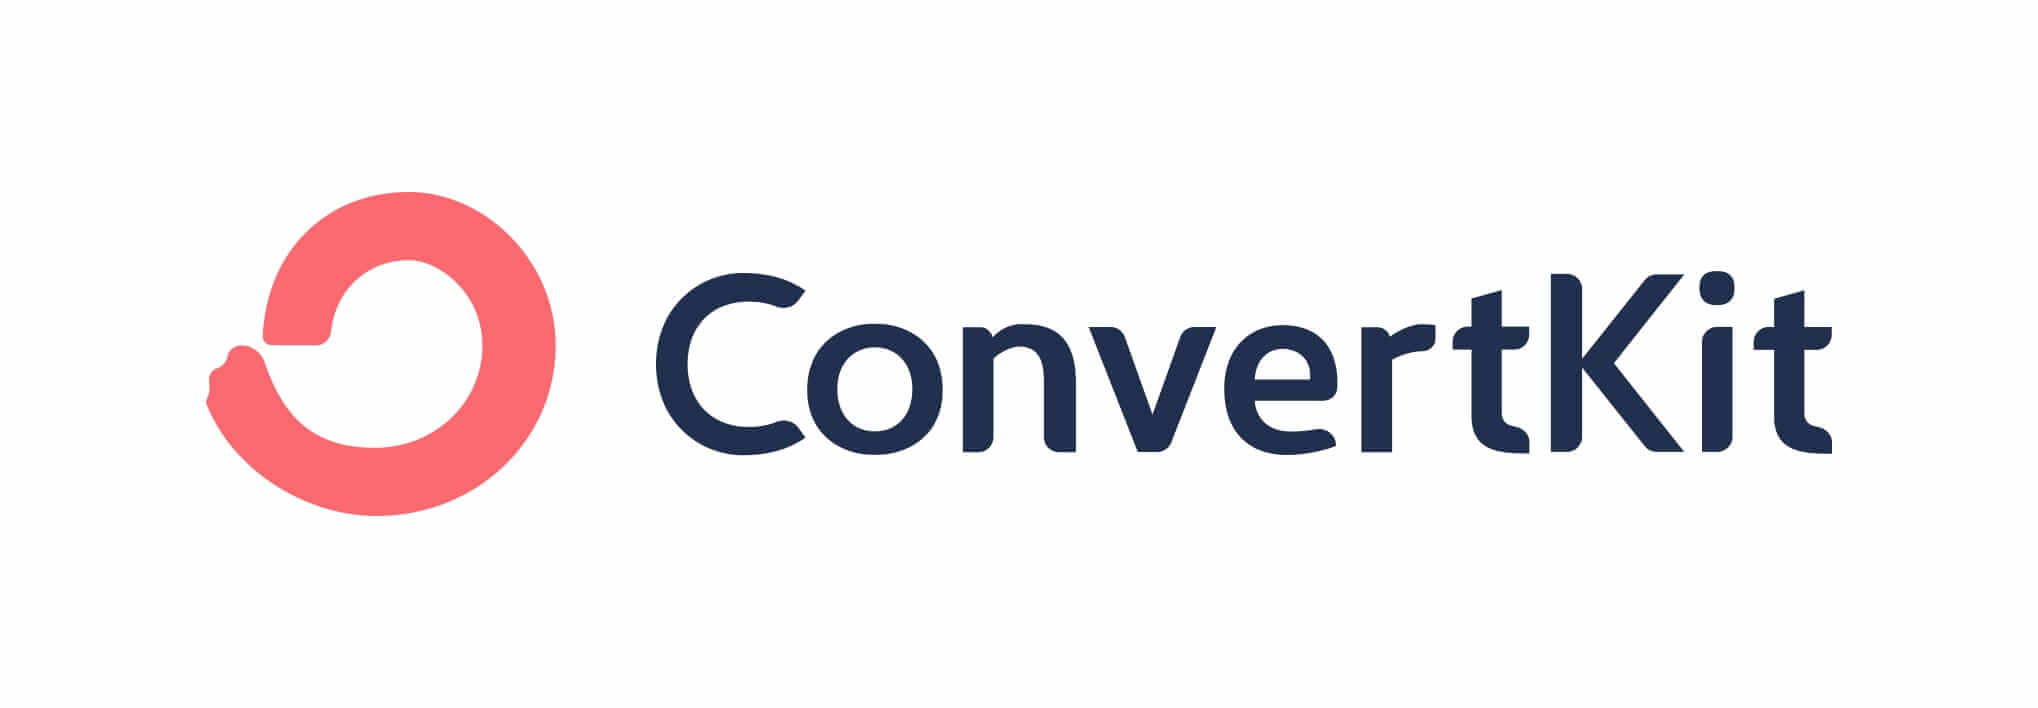 Convertkit-logo